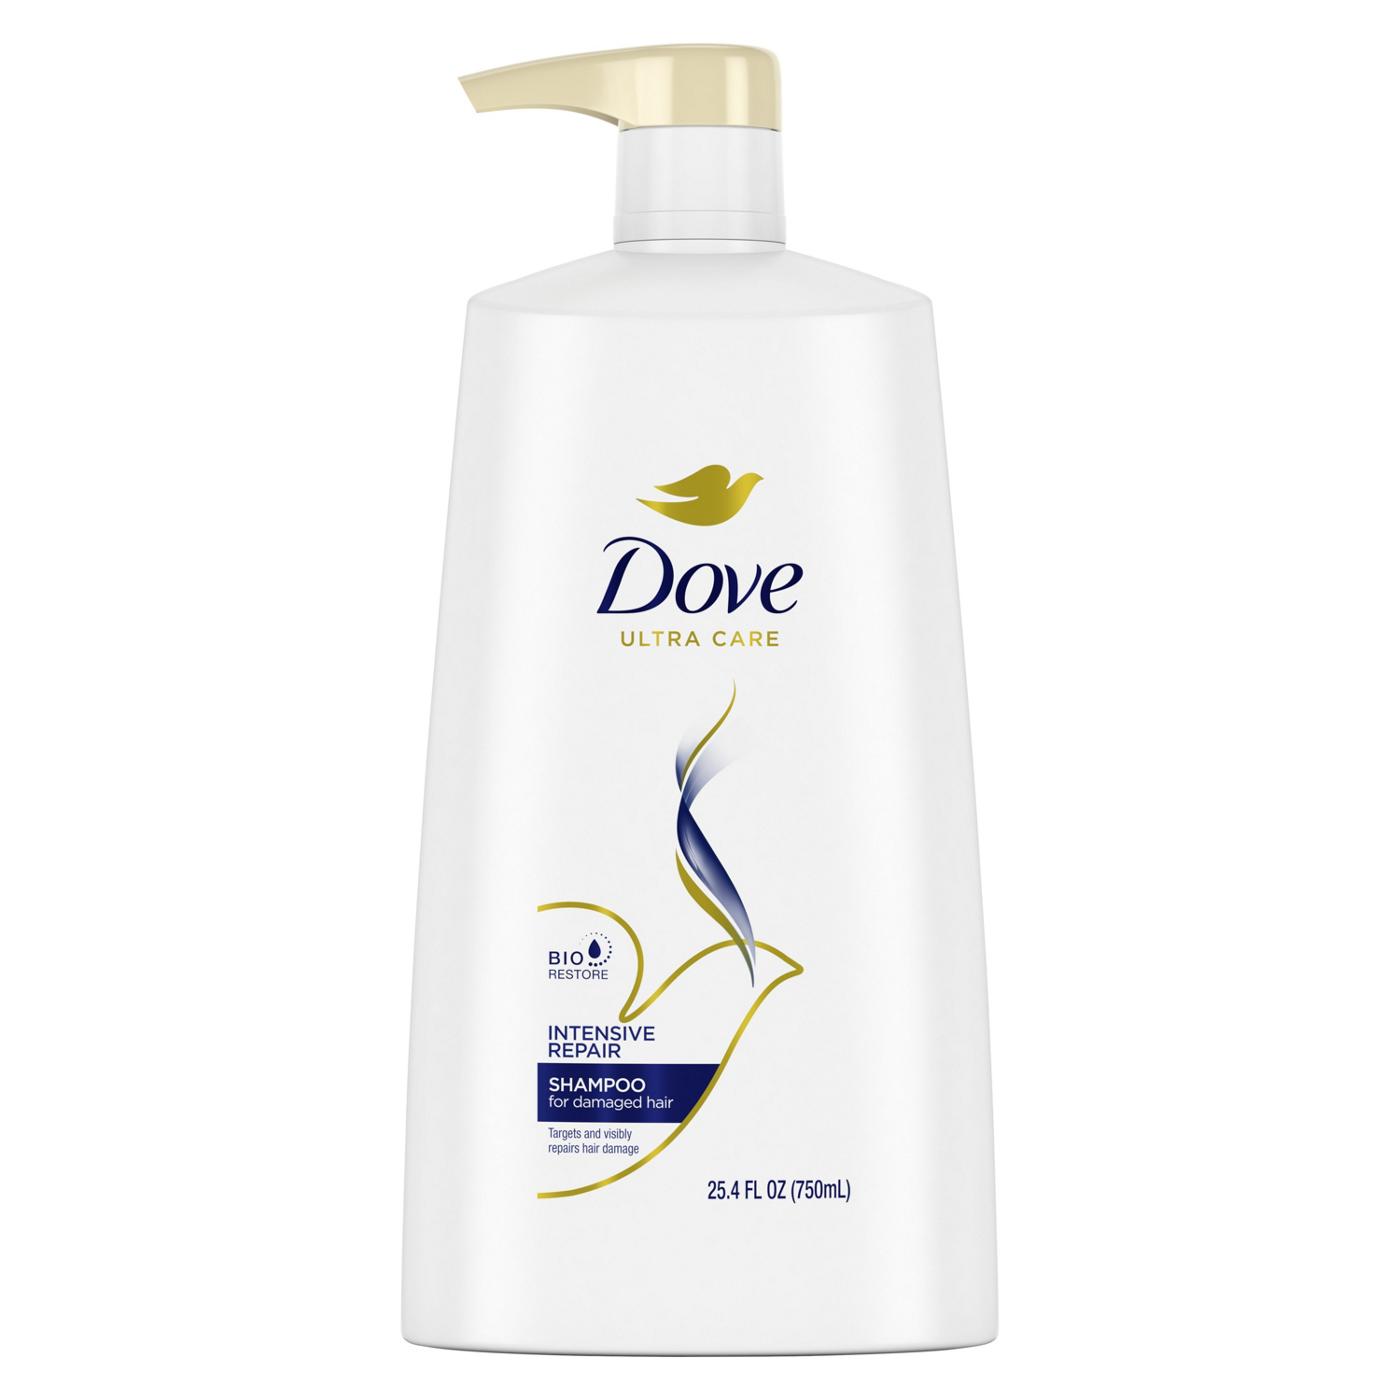 Dove Ultra Care Shampoo - Intensive Repair; image 1 of 8